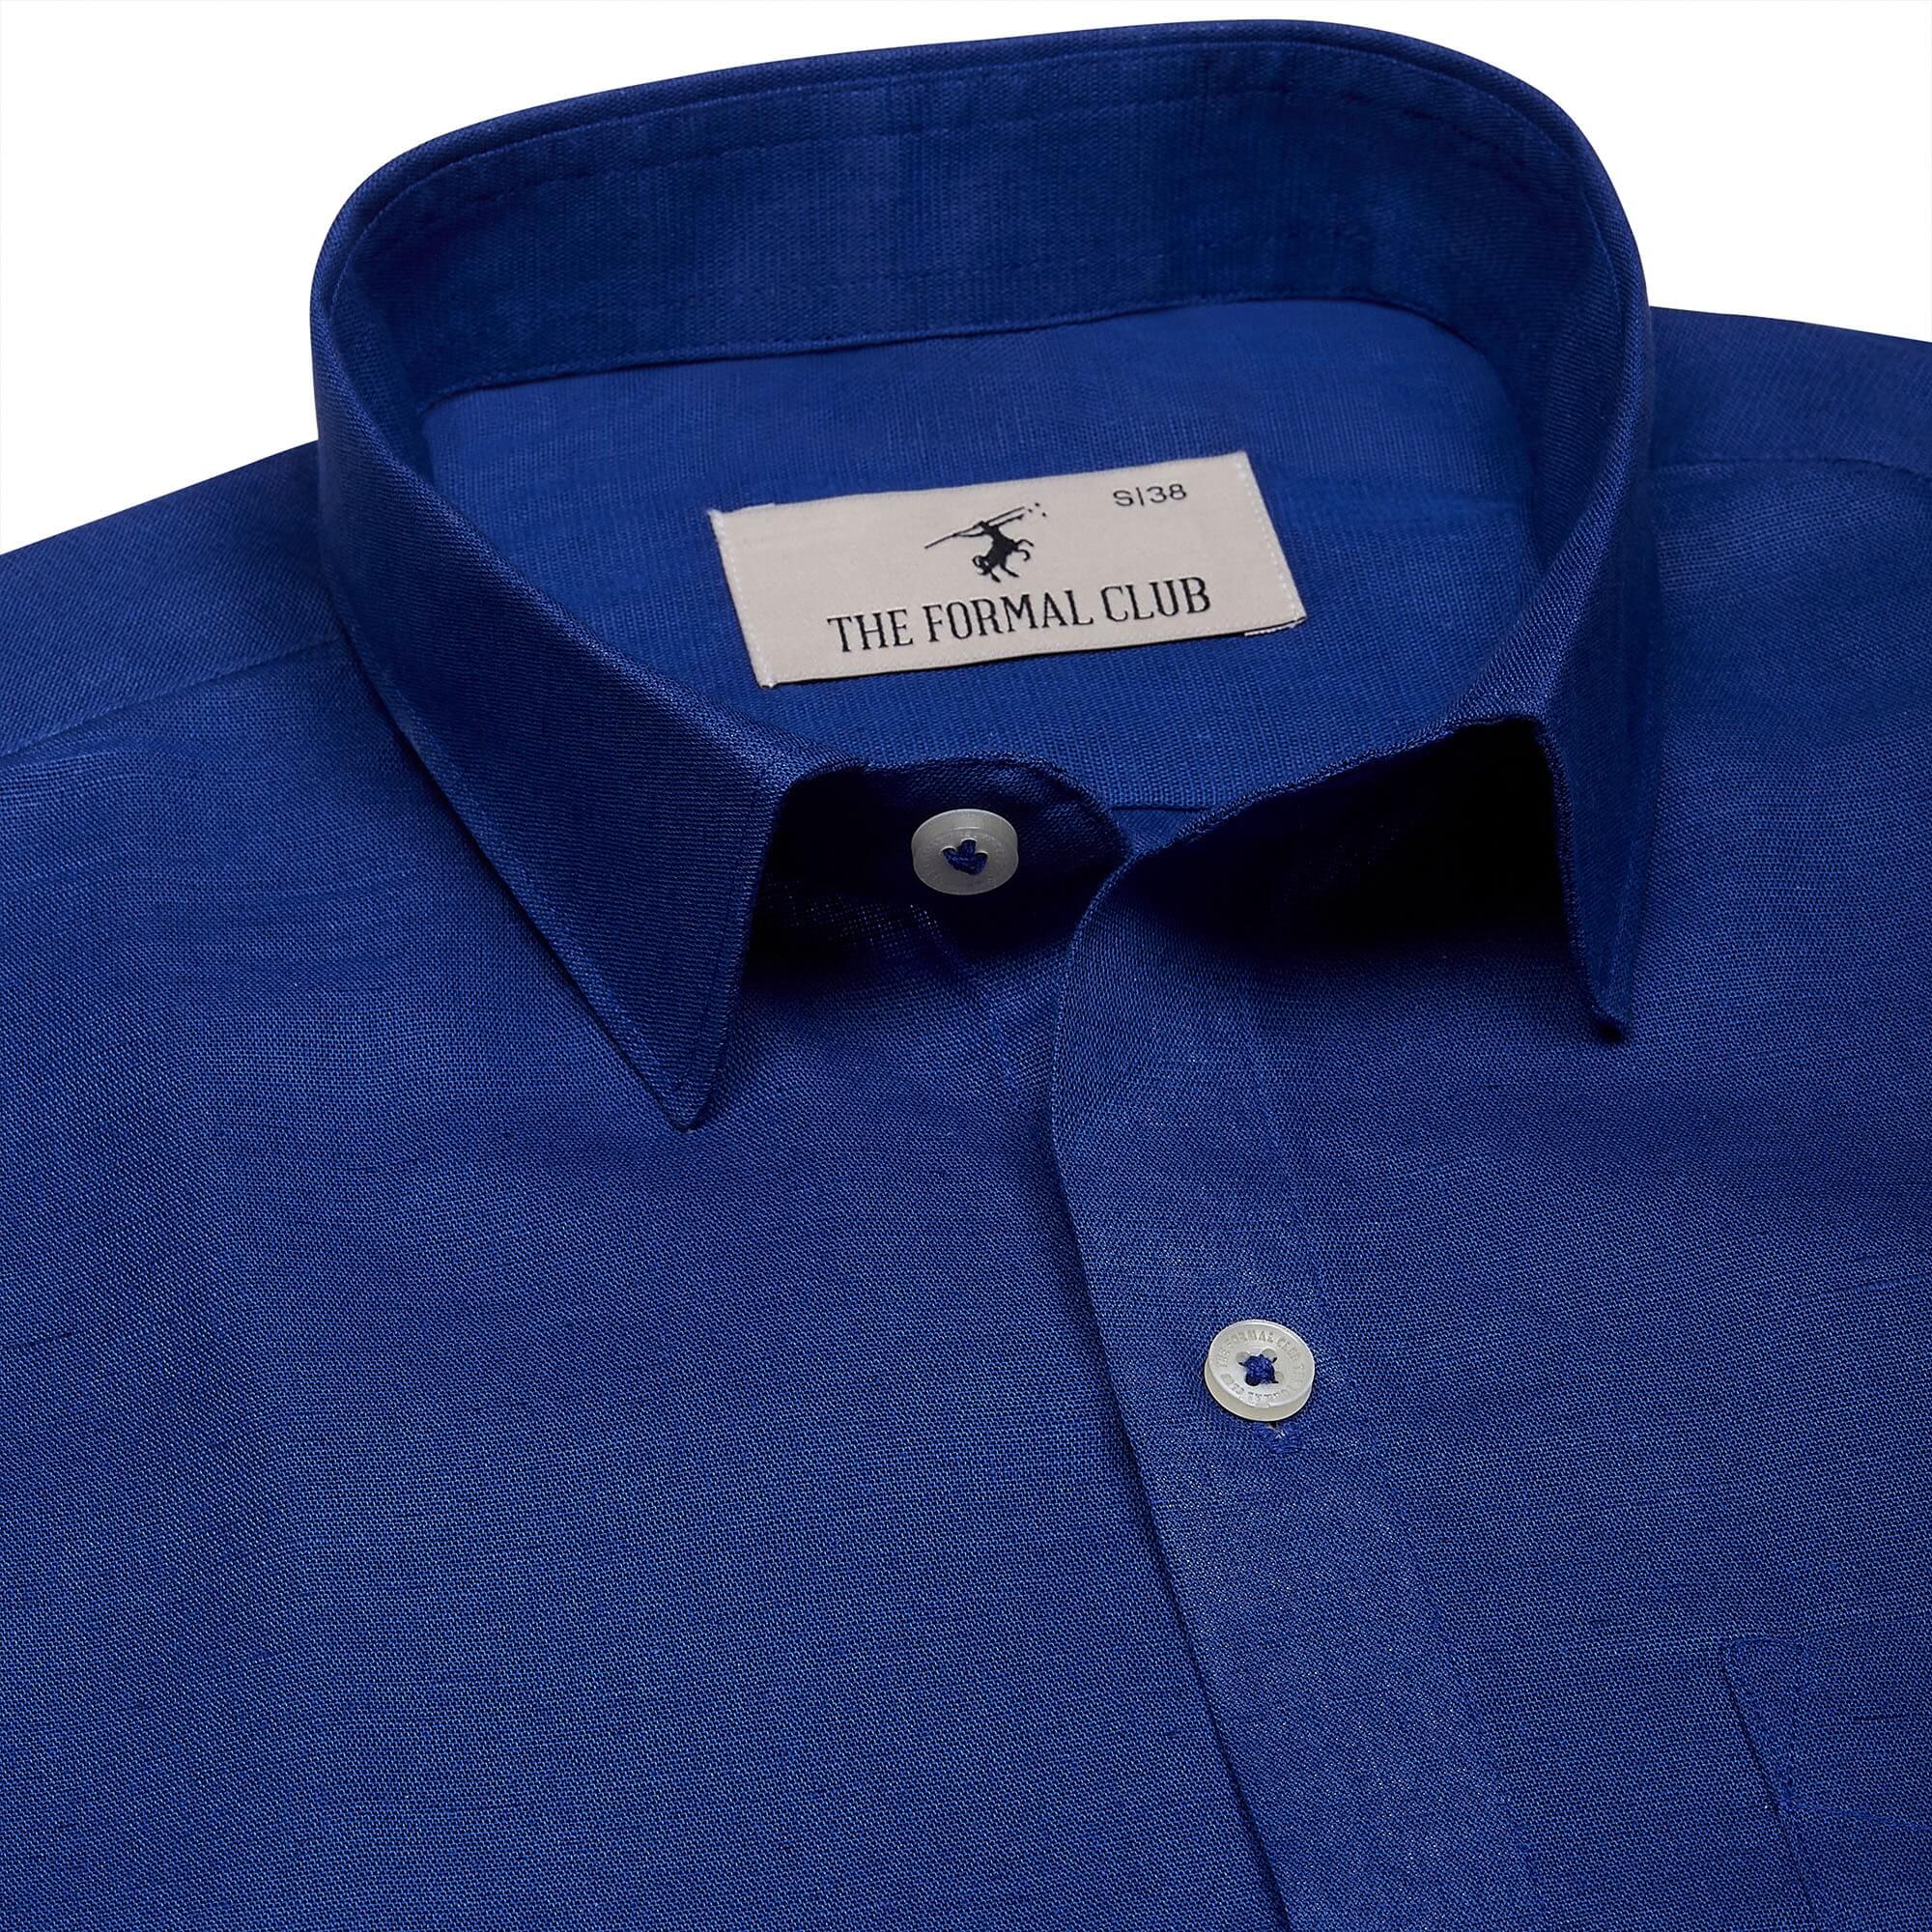 Luna Lenin Solid Shirt In Navy Blue - The Formal Club